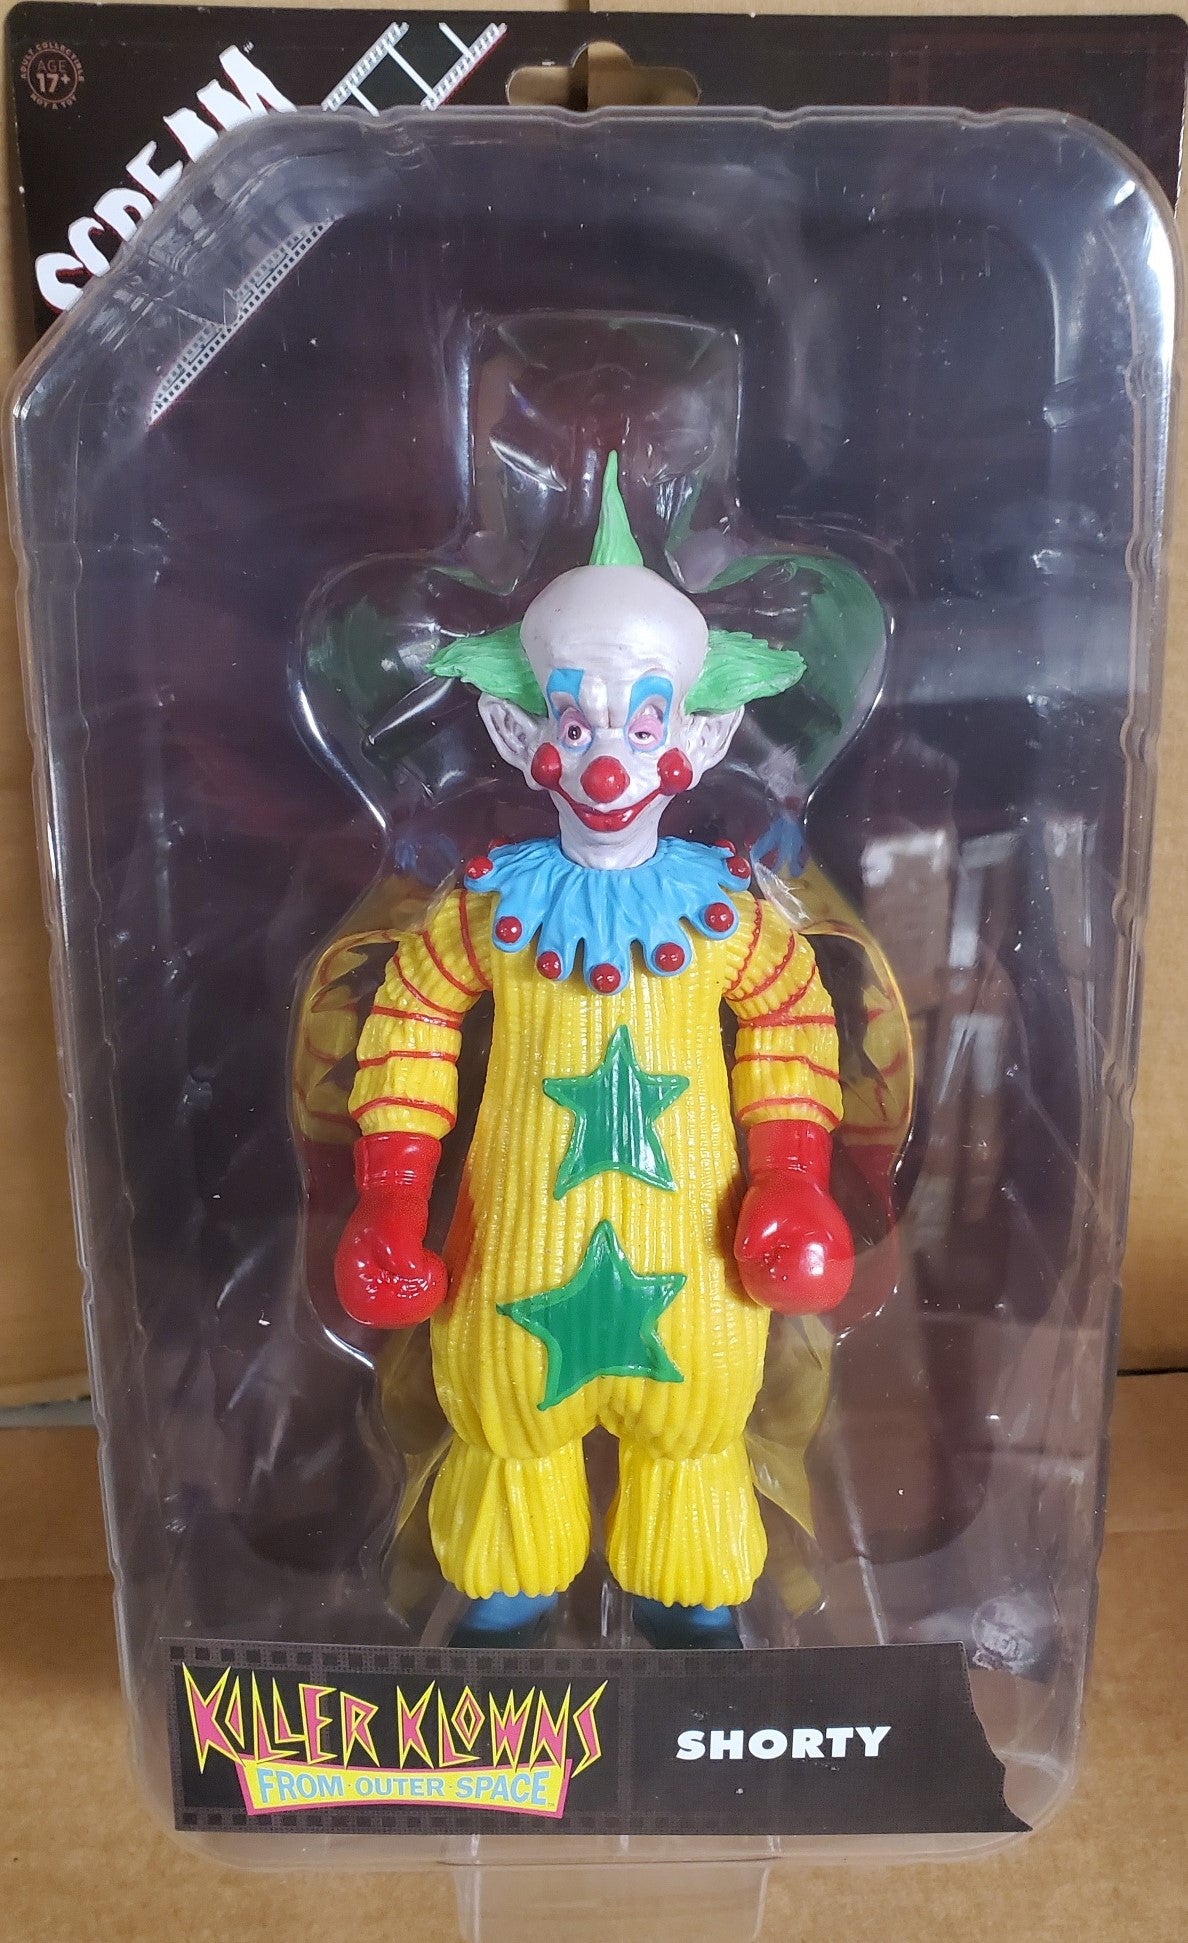 Killer Klowns Shorty action figure